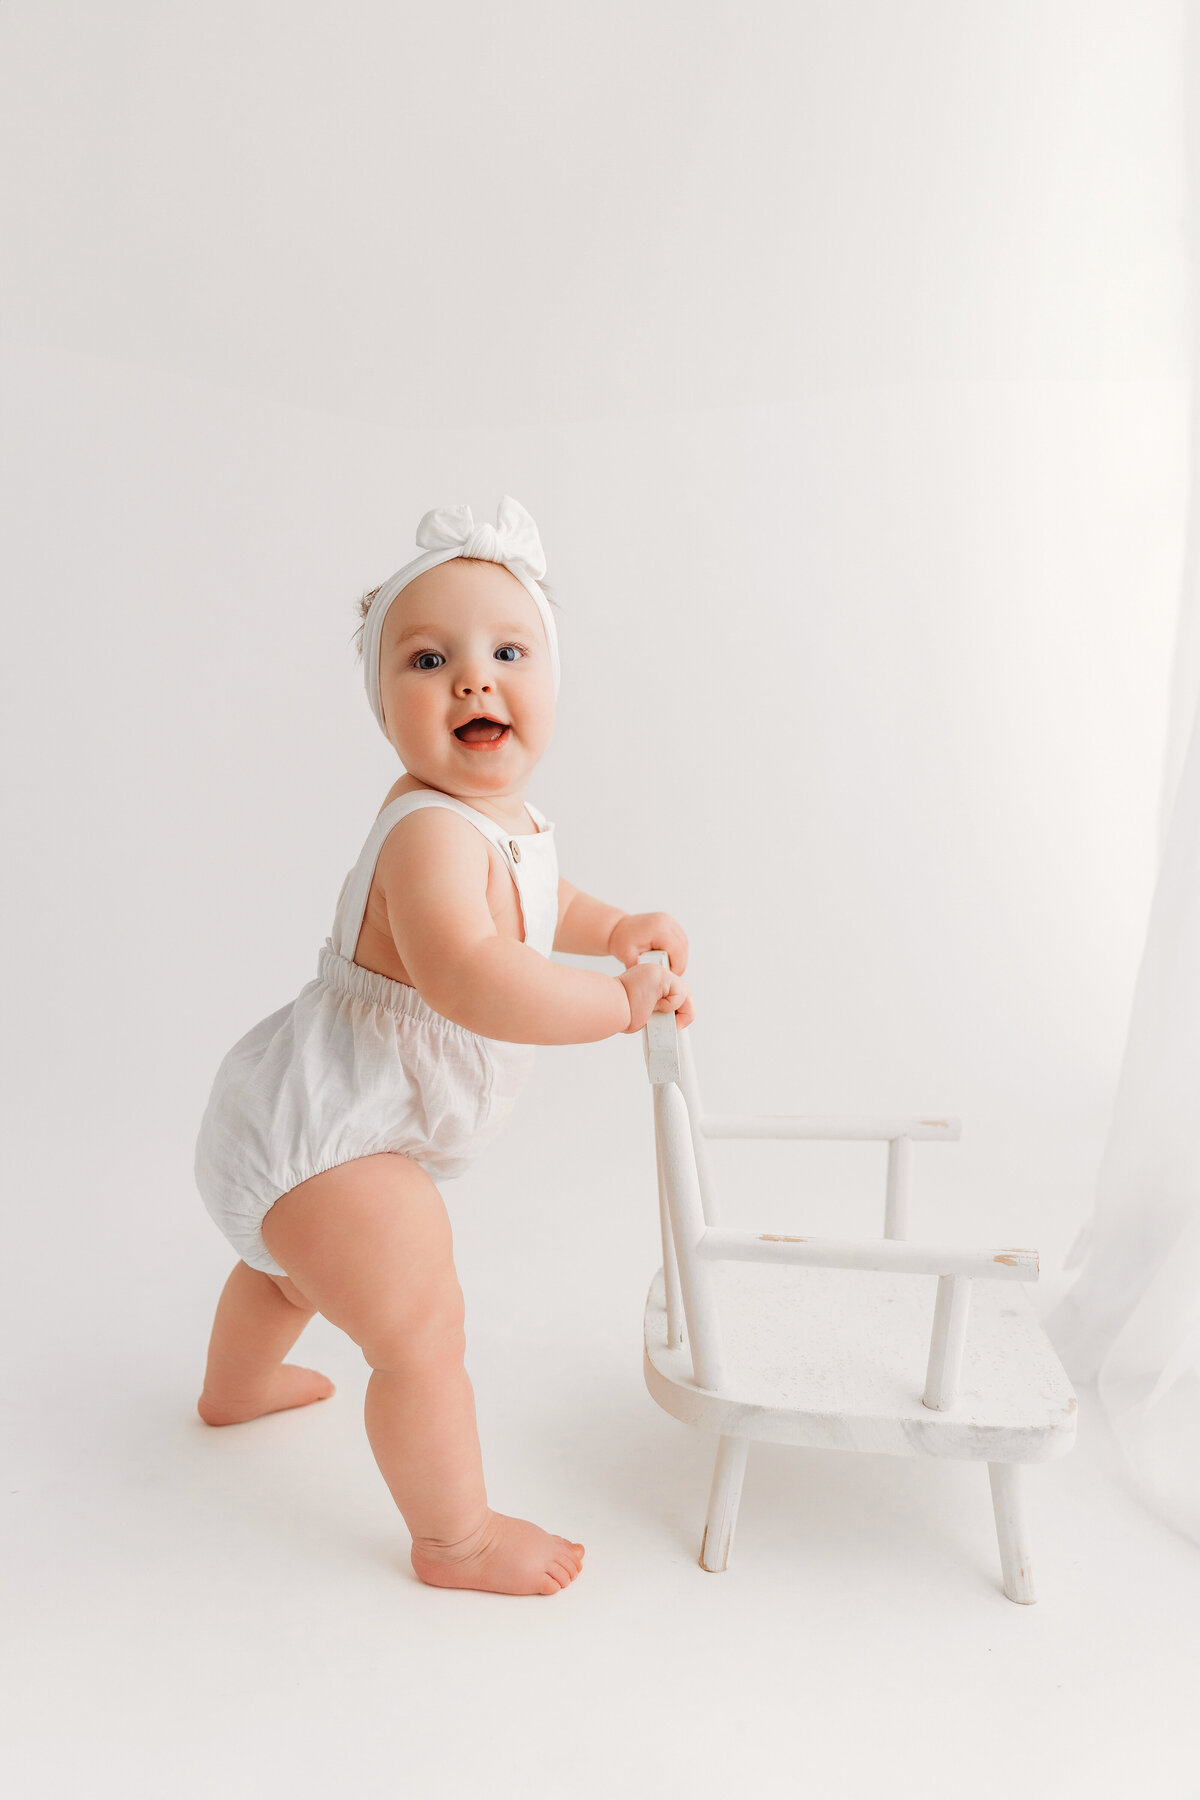 infant portrait session on white backdrop